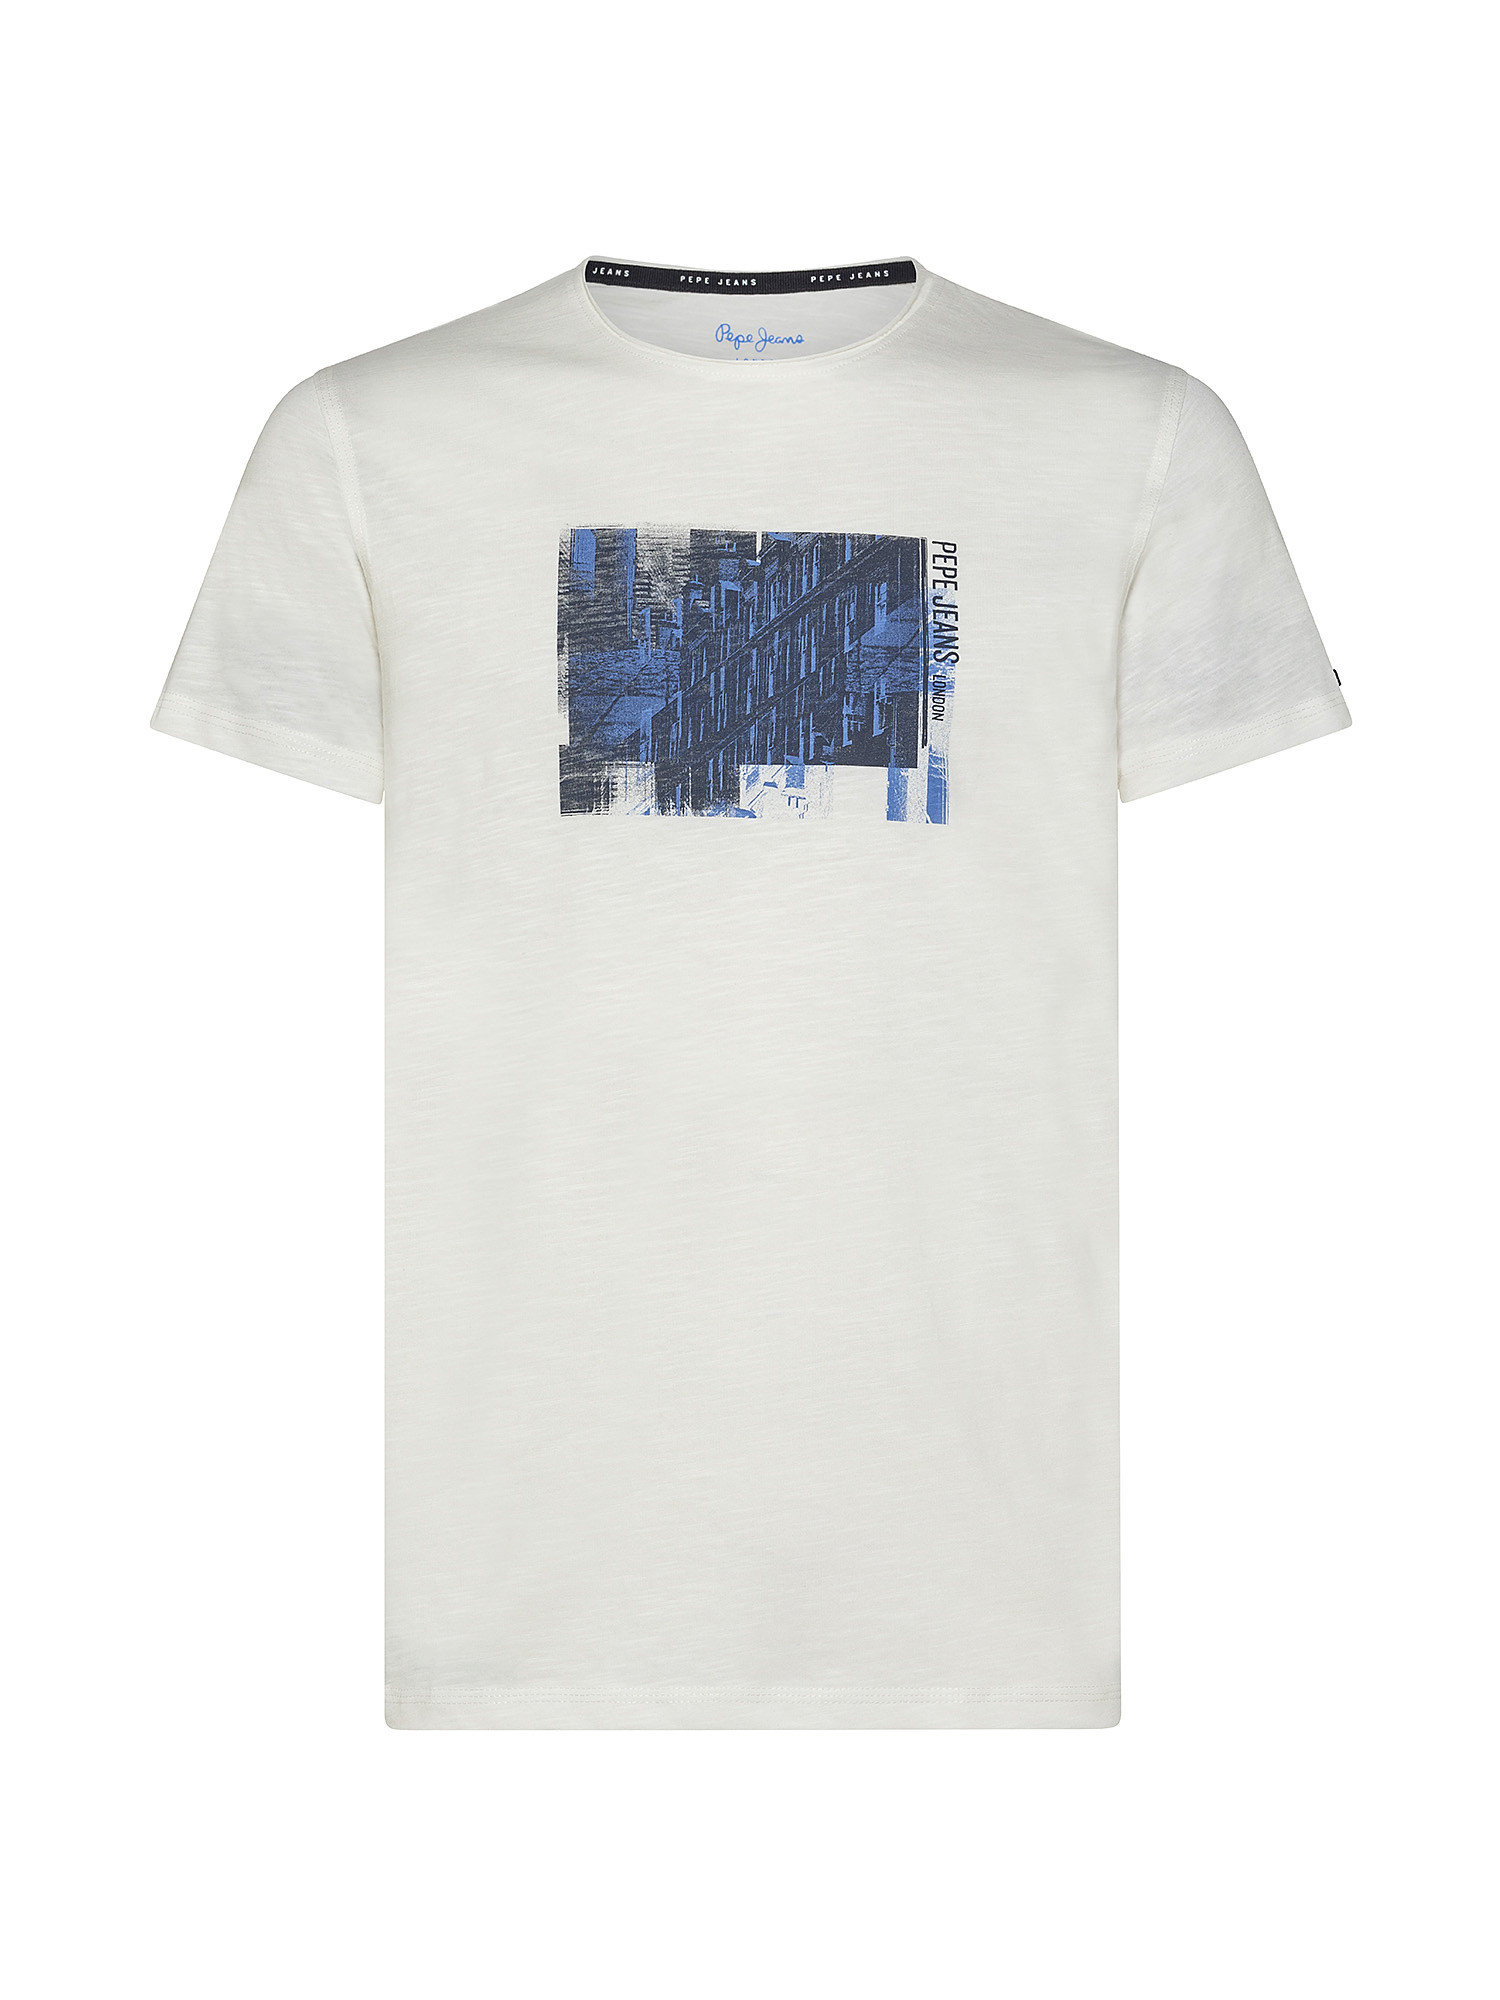 Sherlock cotton T-shirt, White, large image number 0